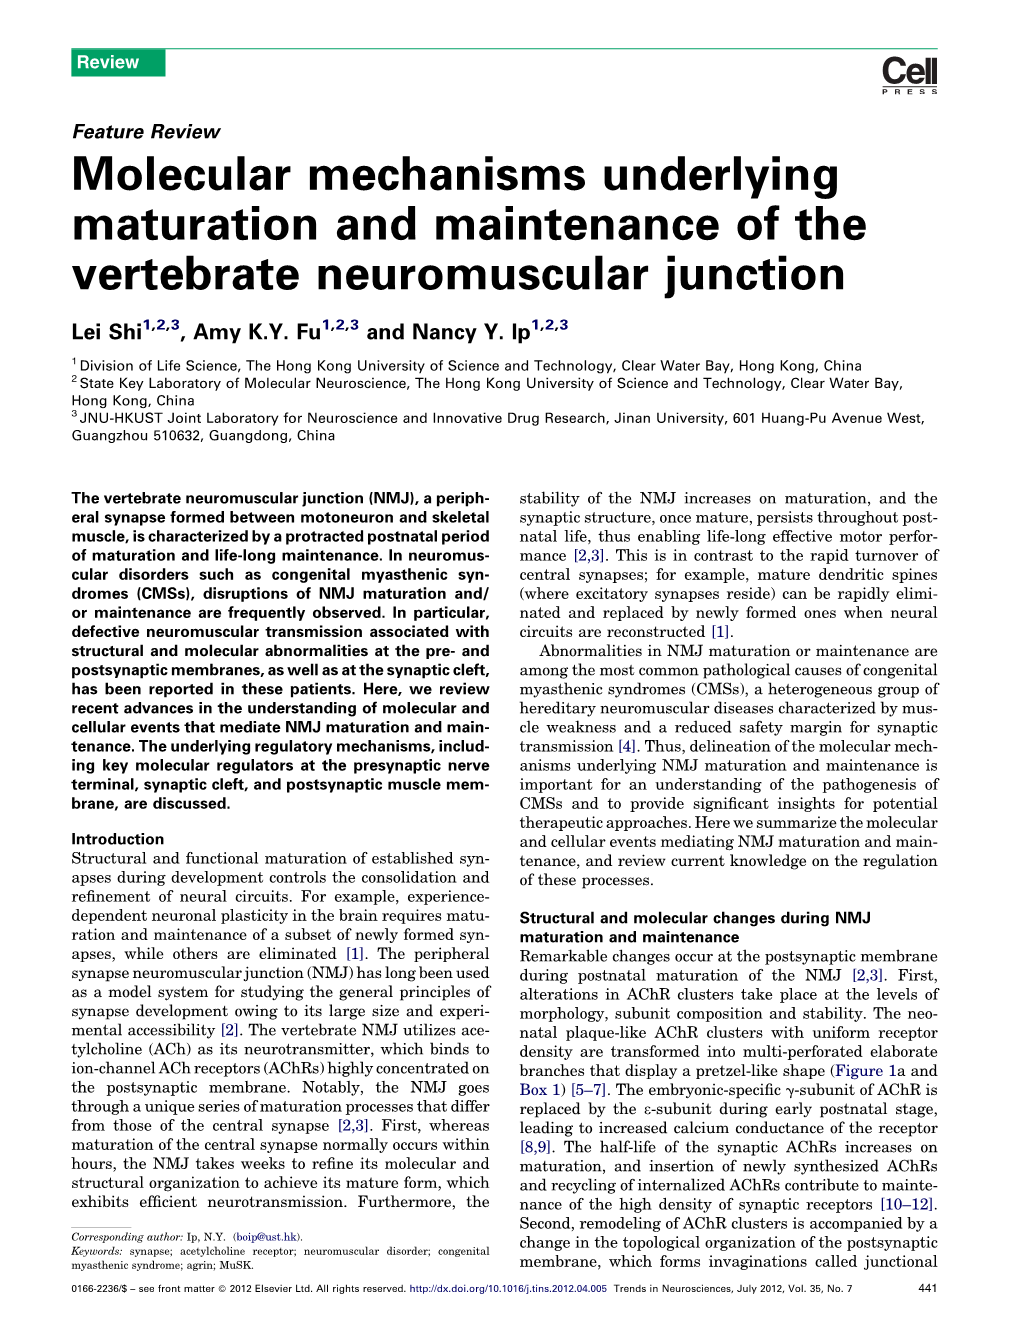 Molecular Mechanisms Underlying Maturation and Maintenance of The